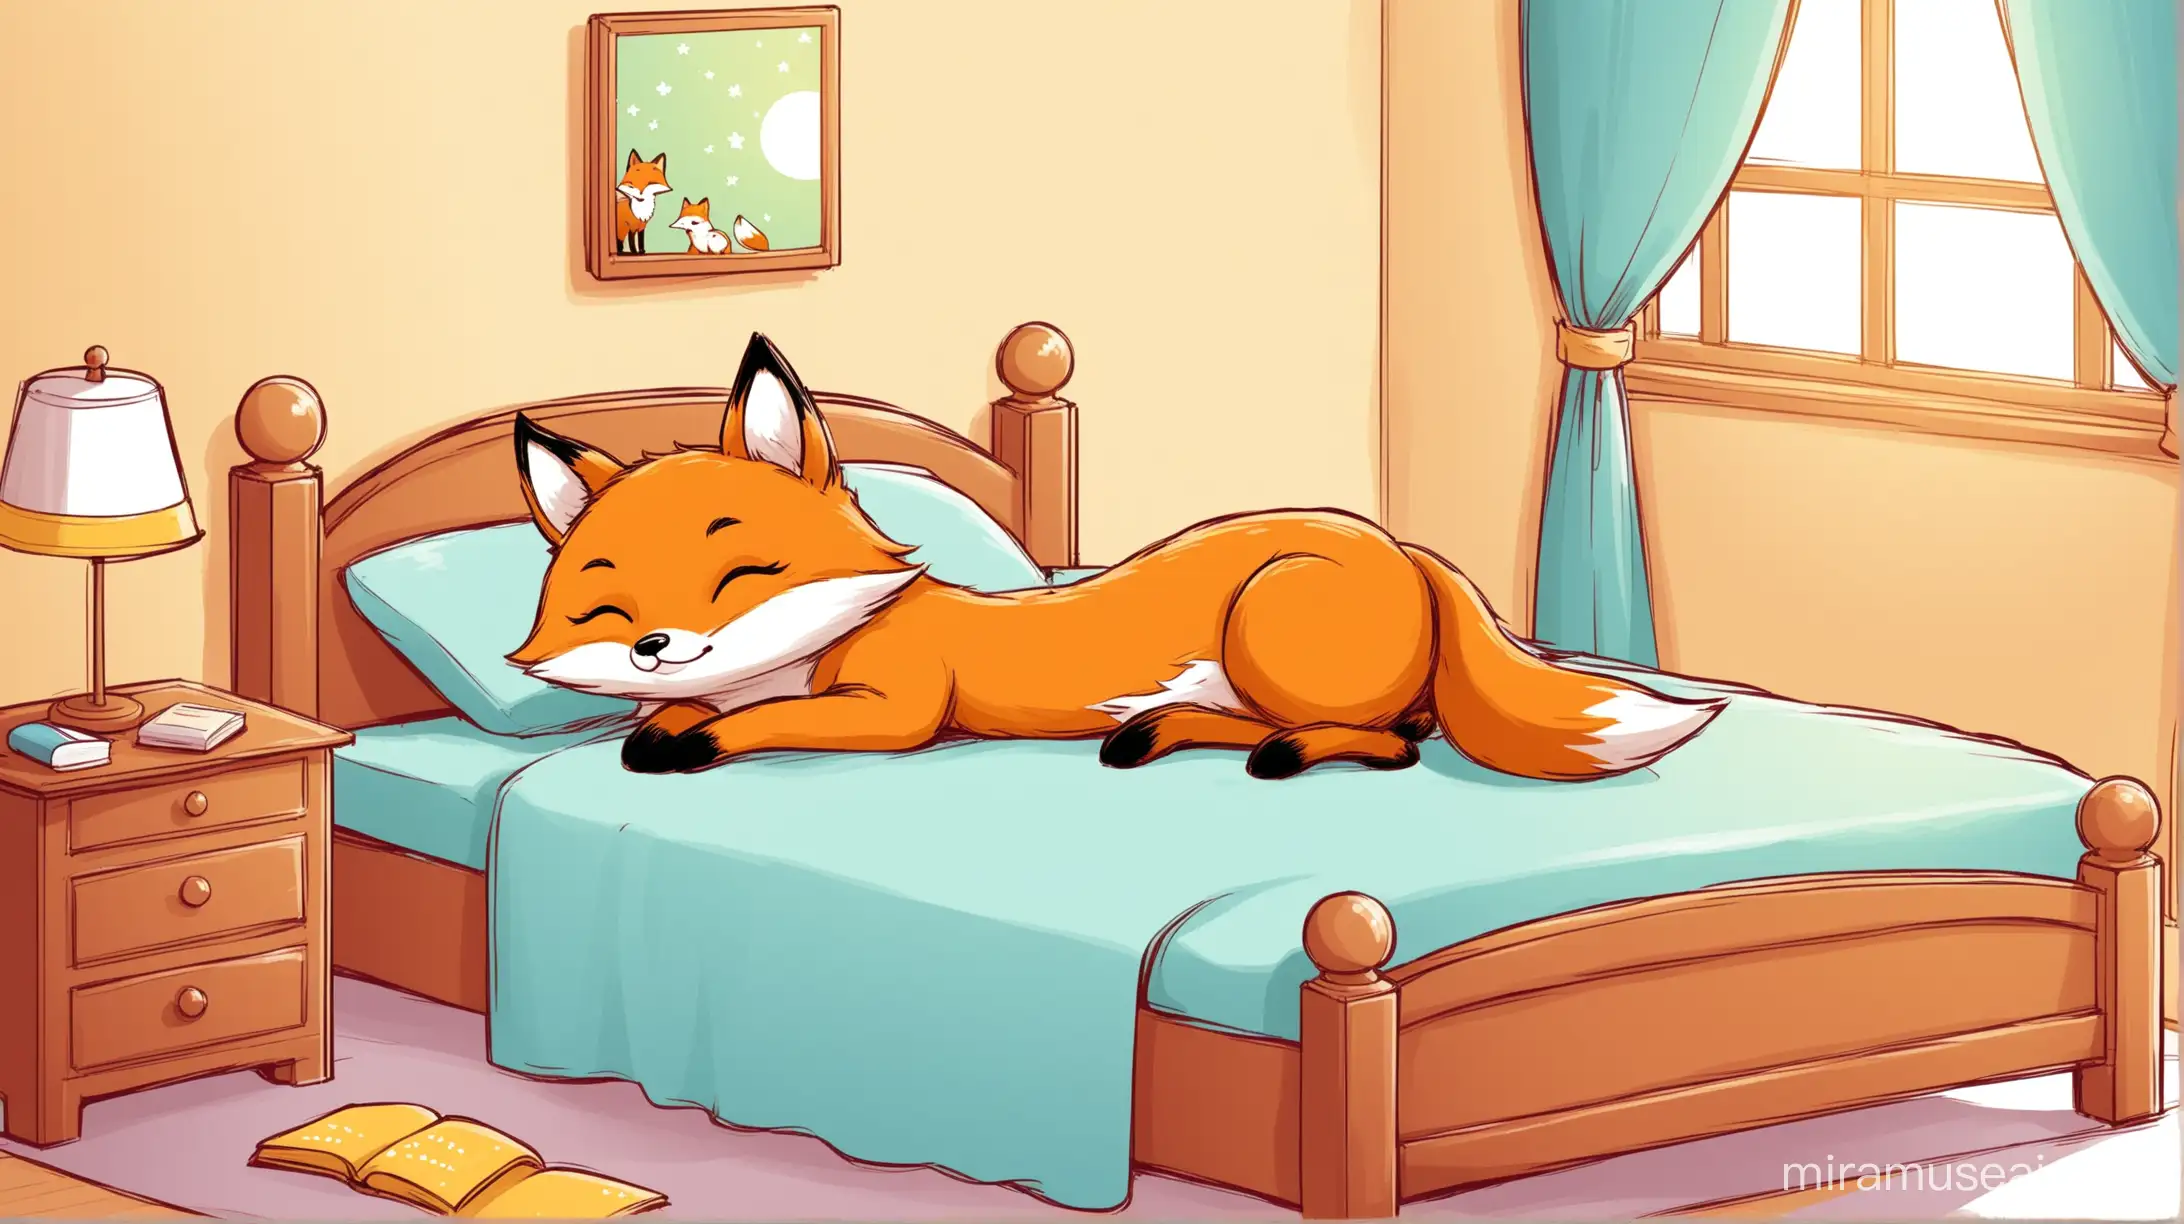 Sleeping Fox Illustration Cartoon Bedroom Scene in Geepli Style